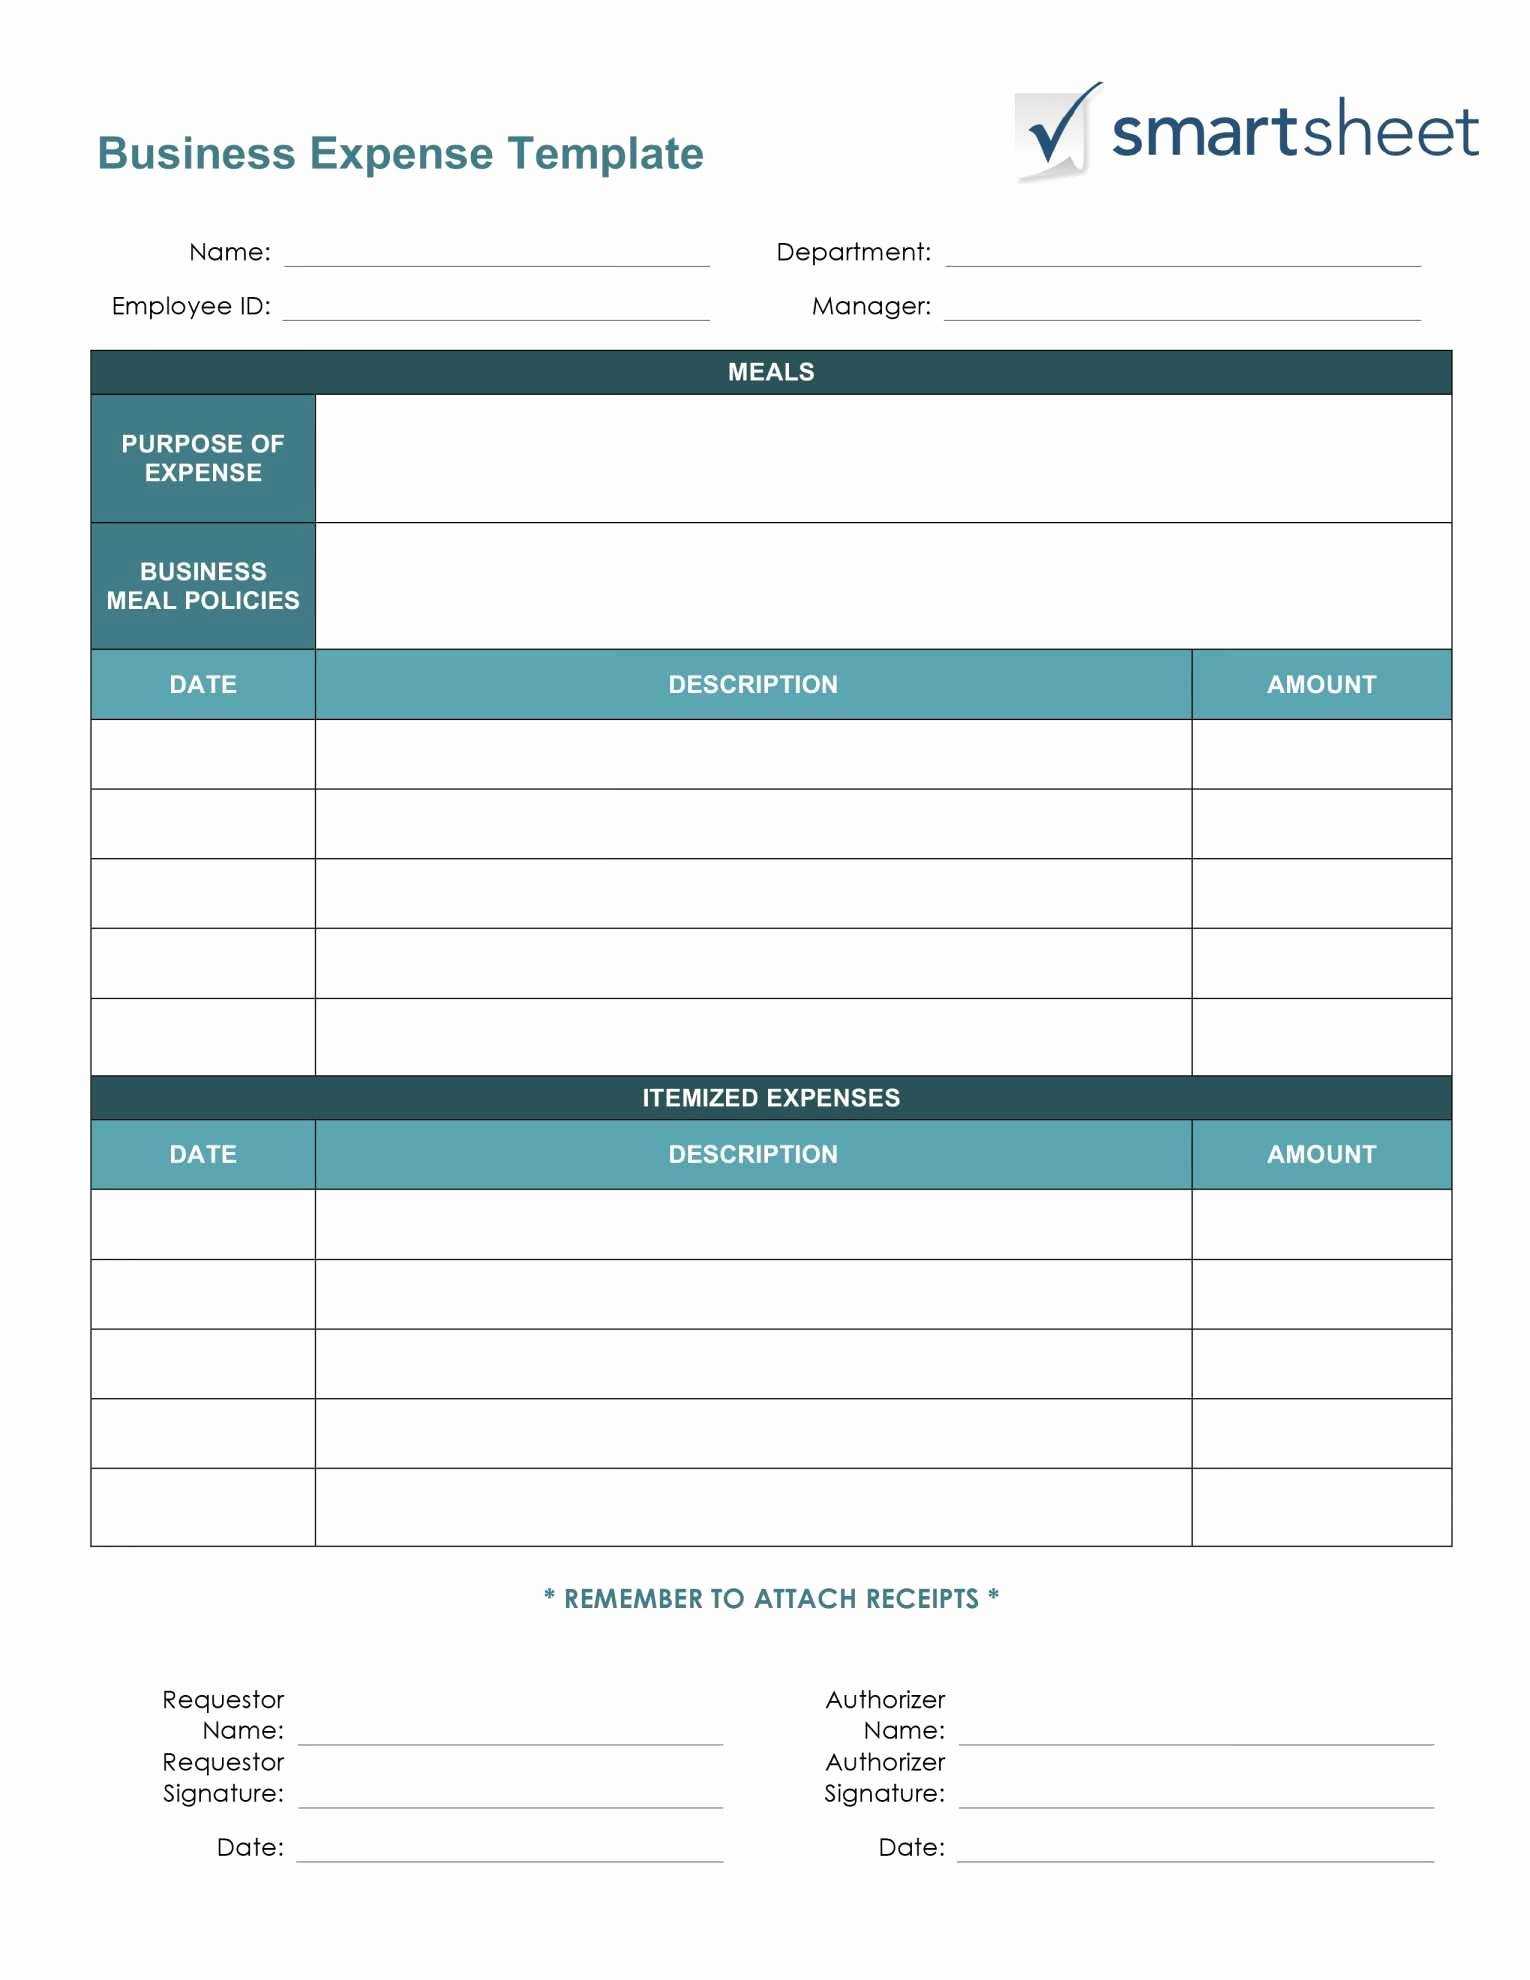 Budget Worksheet Pdf as Well as Free Monthly Bud Planner Spreadsheet Free Free Sample Resume